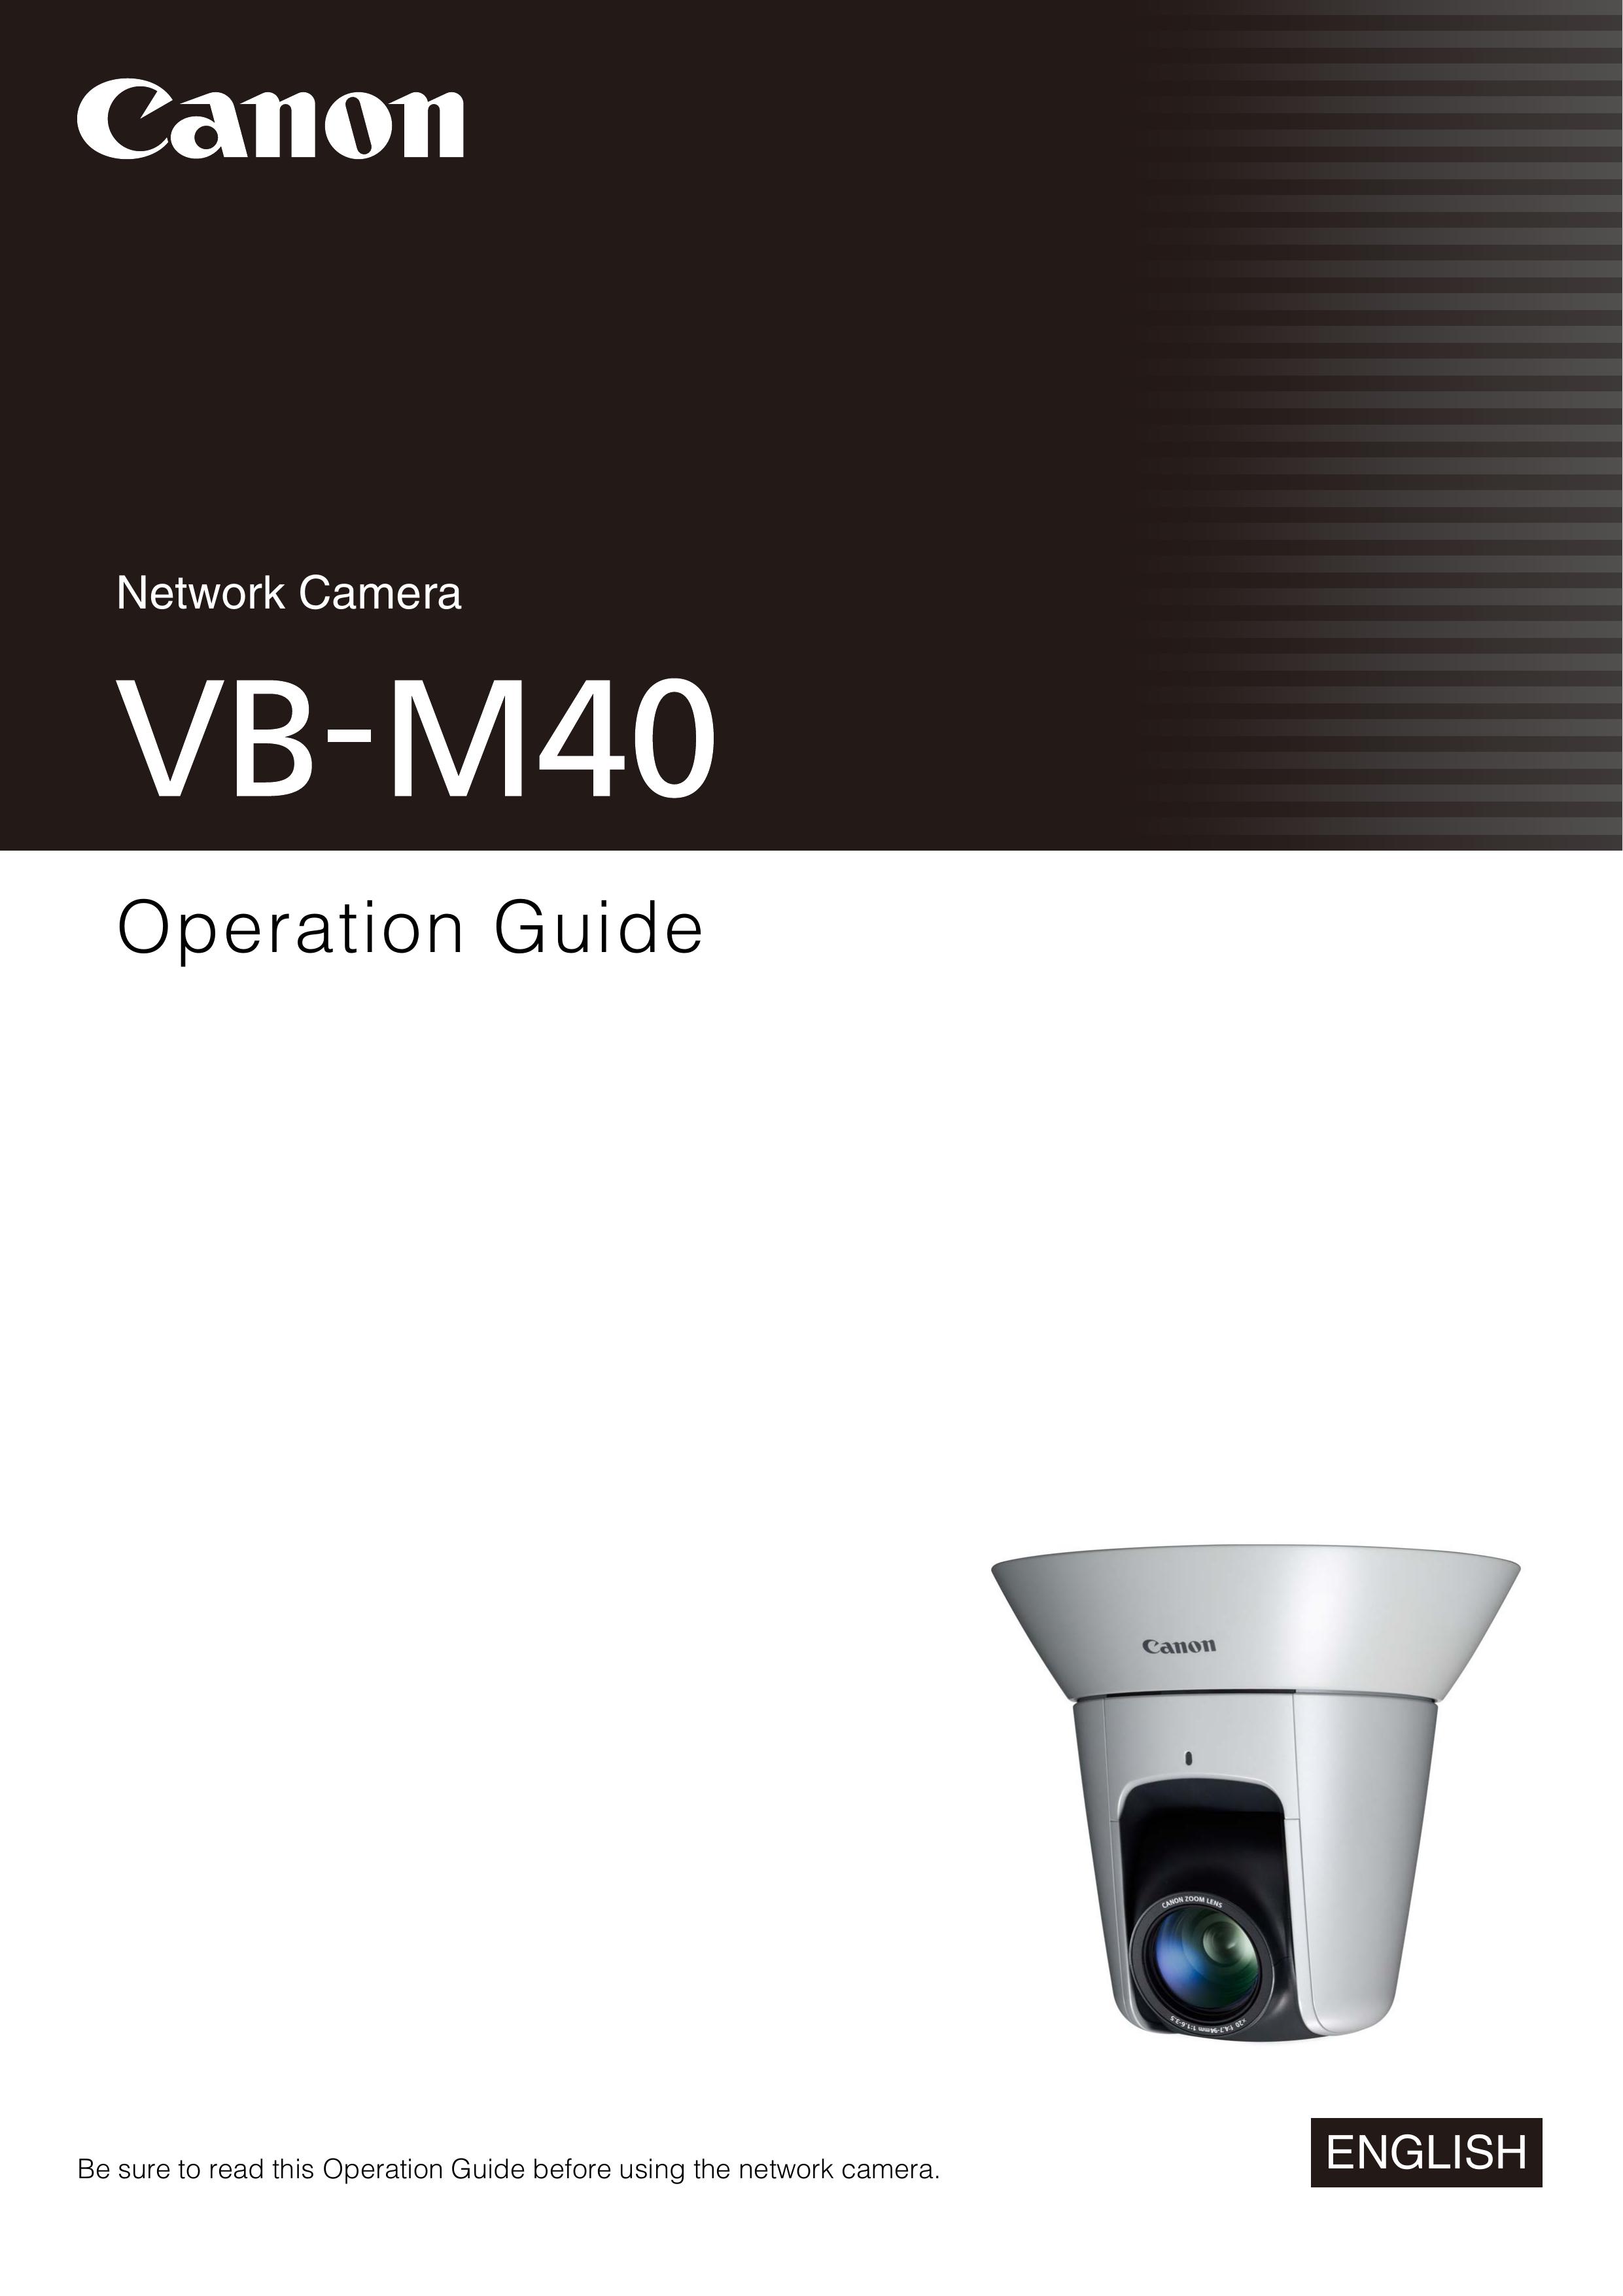 Canon VB-M40 Security Camera User Manual